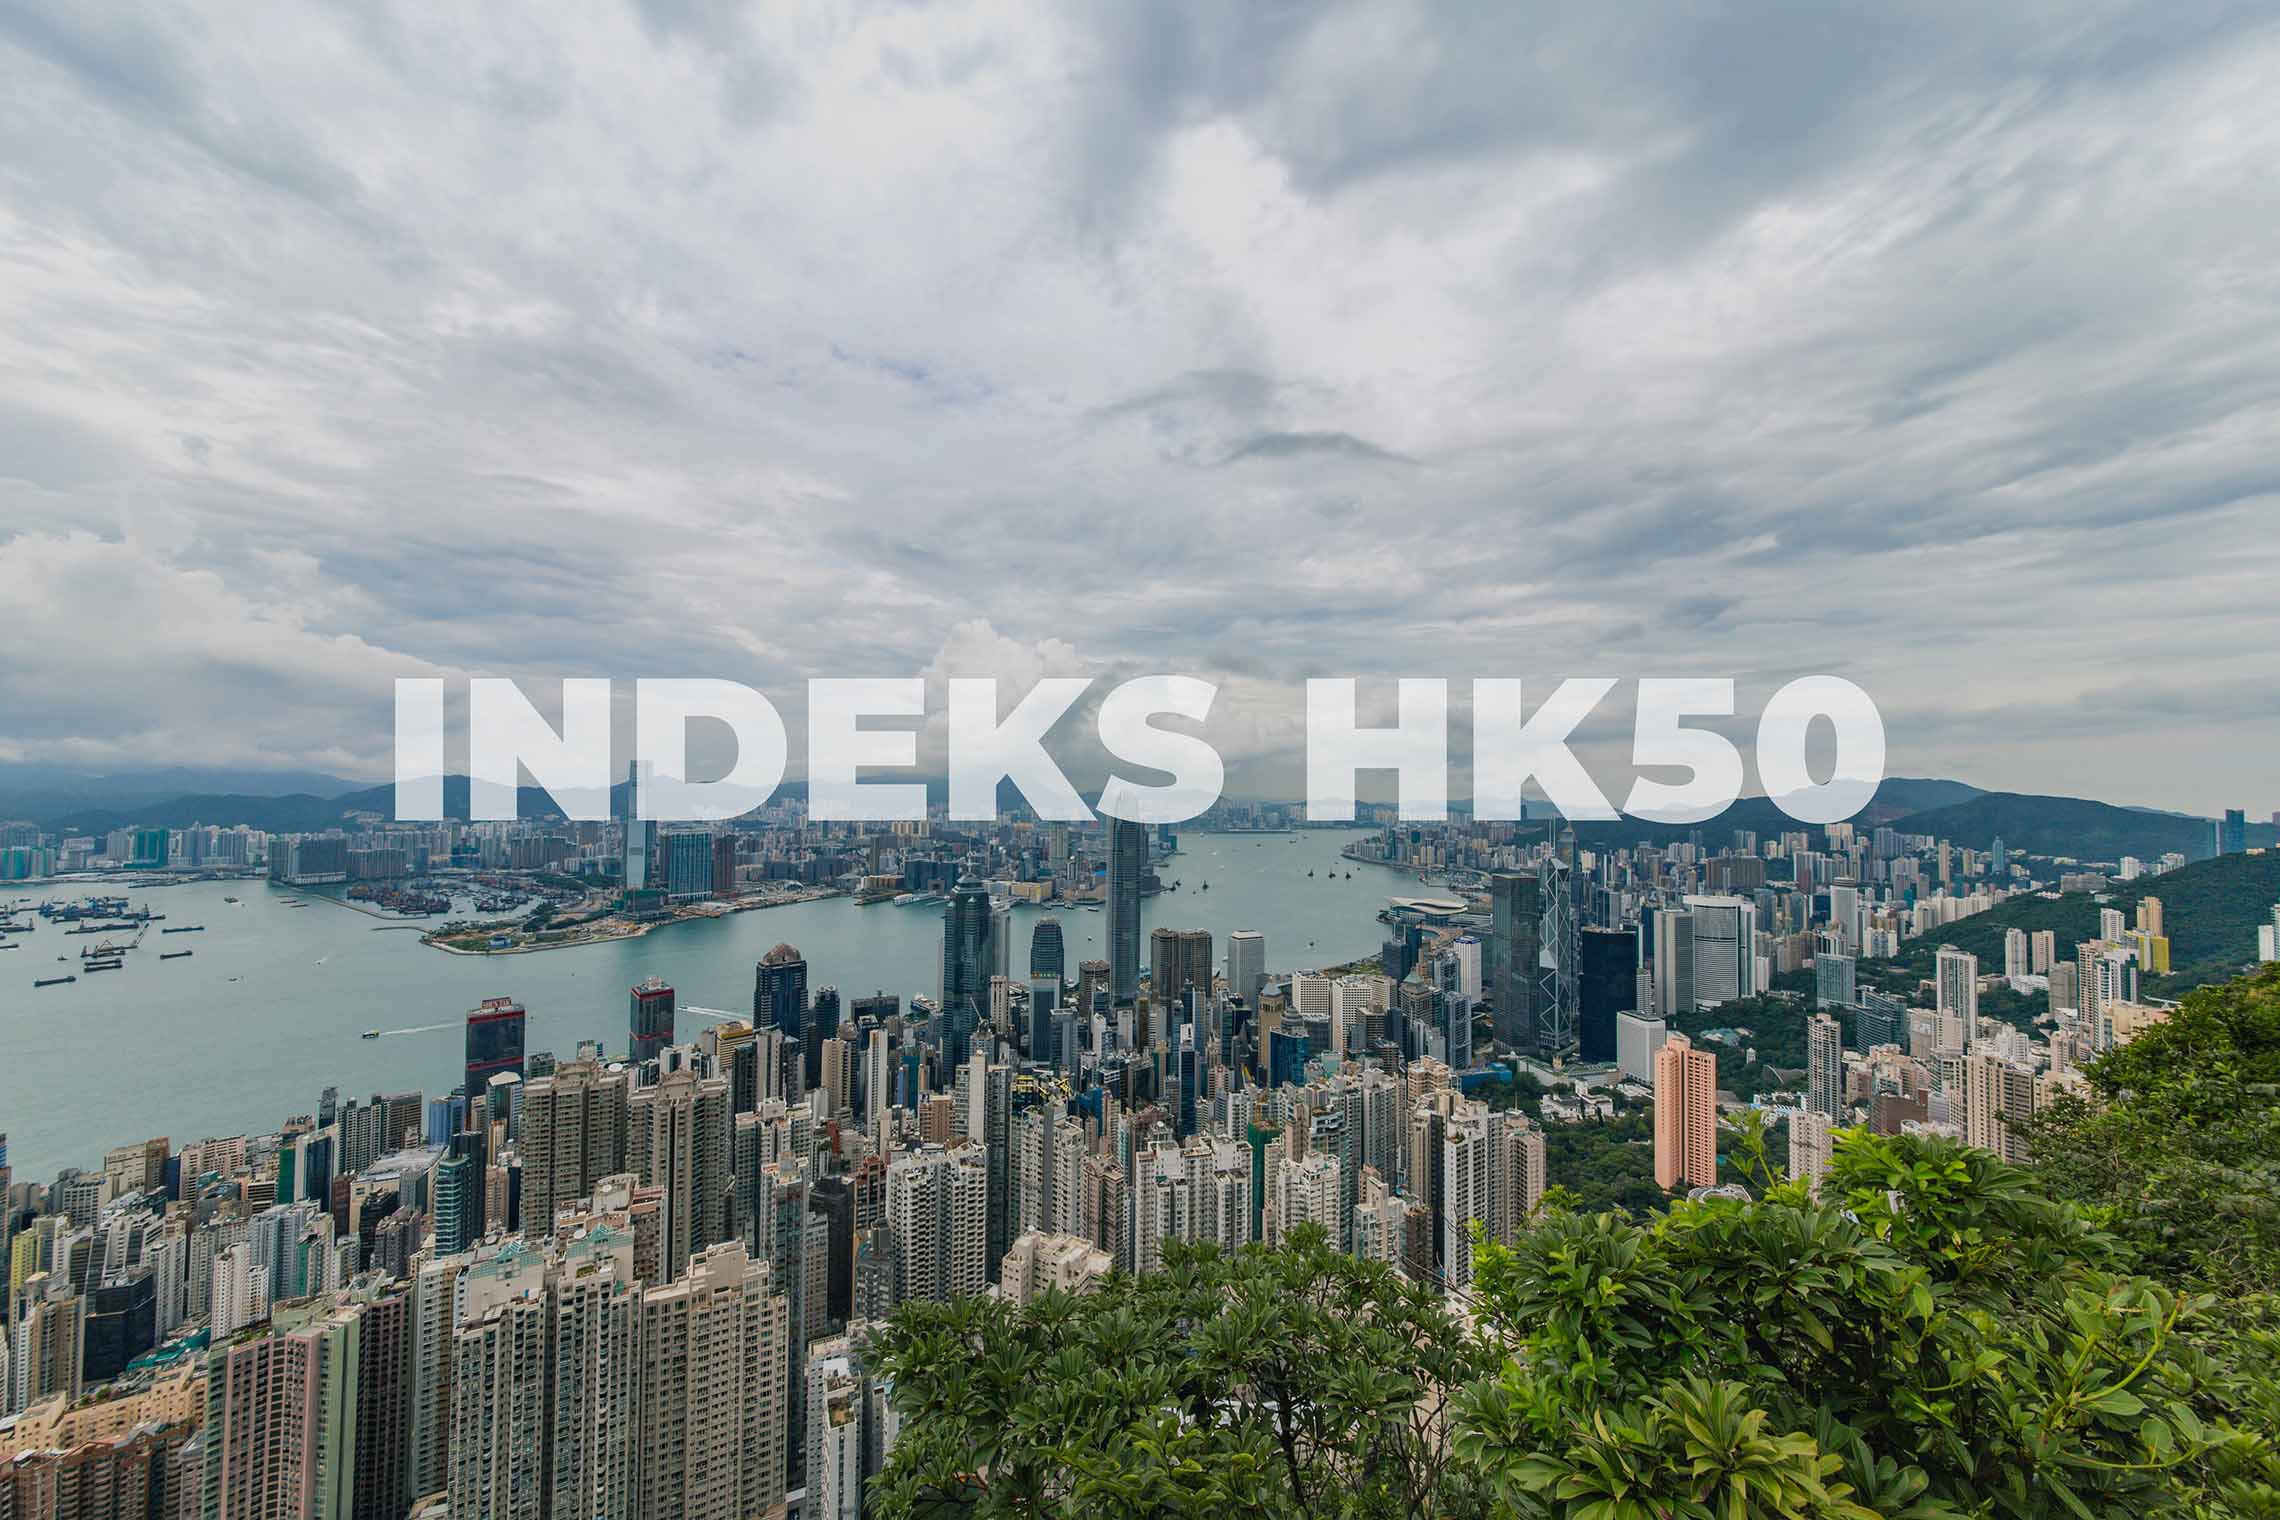 HK50, Index Andalan Hong Kong